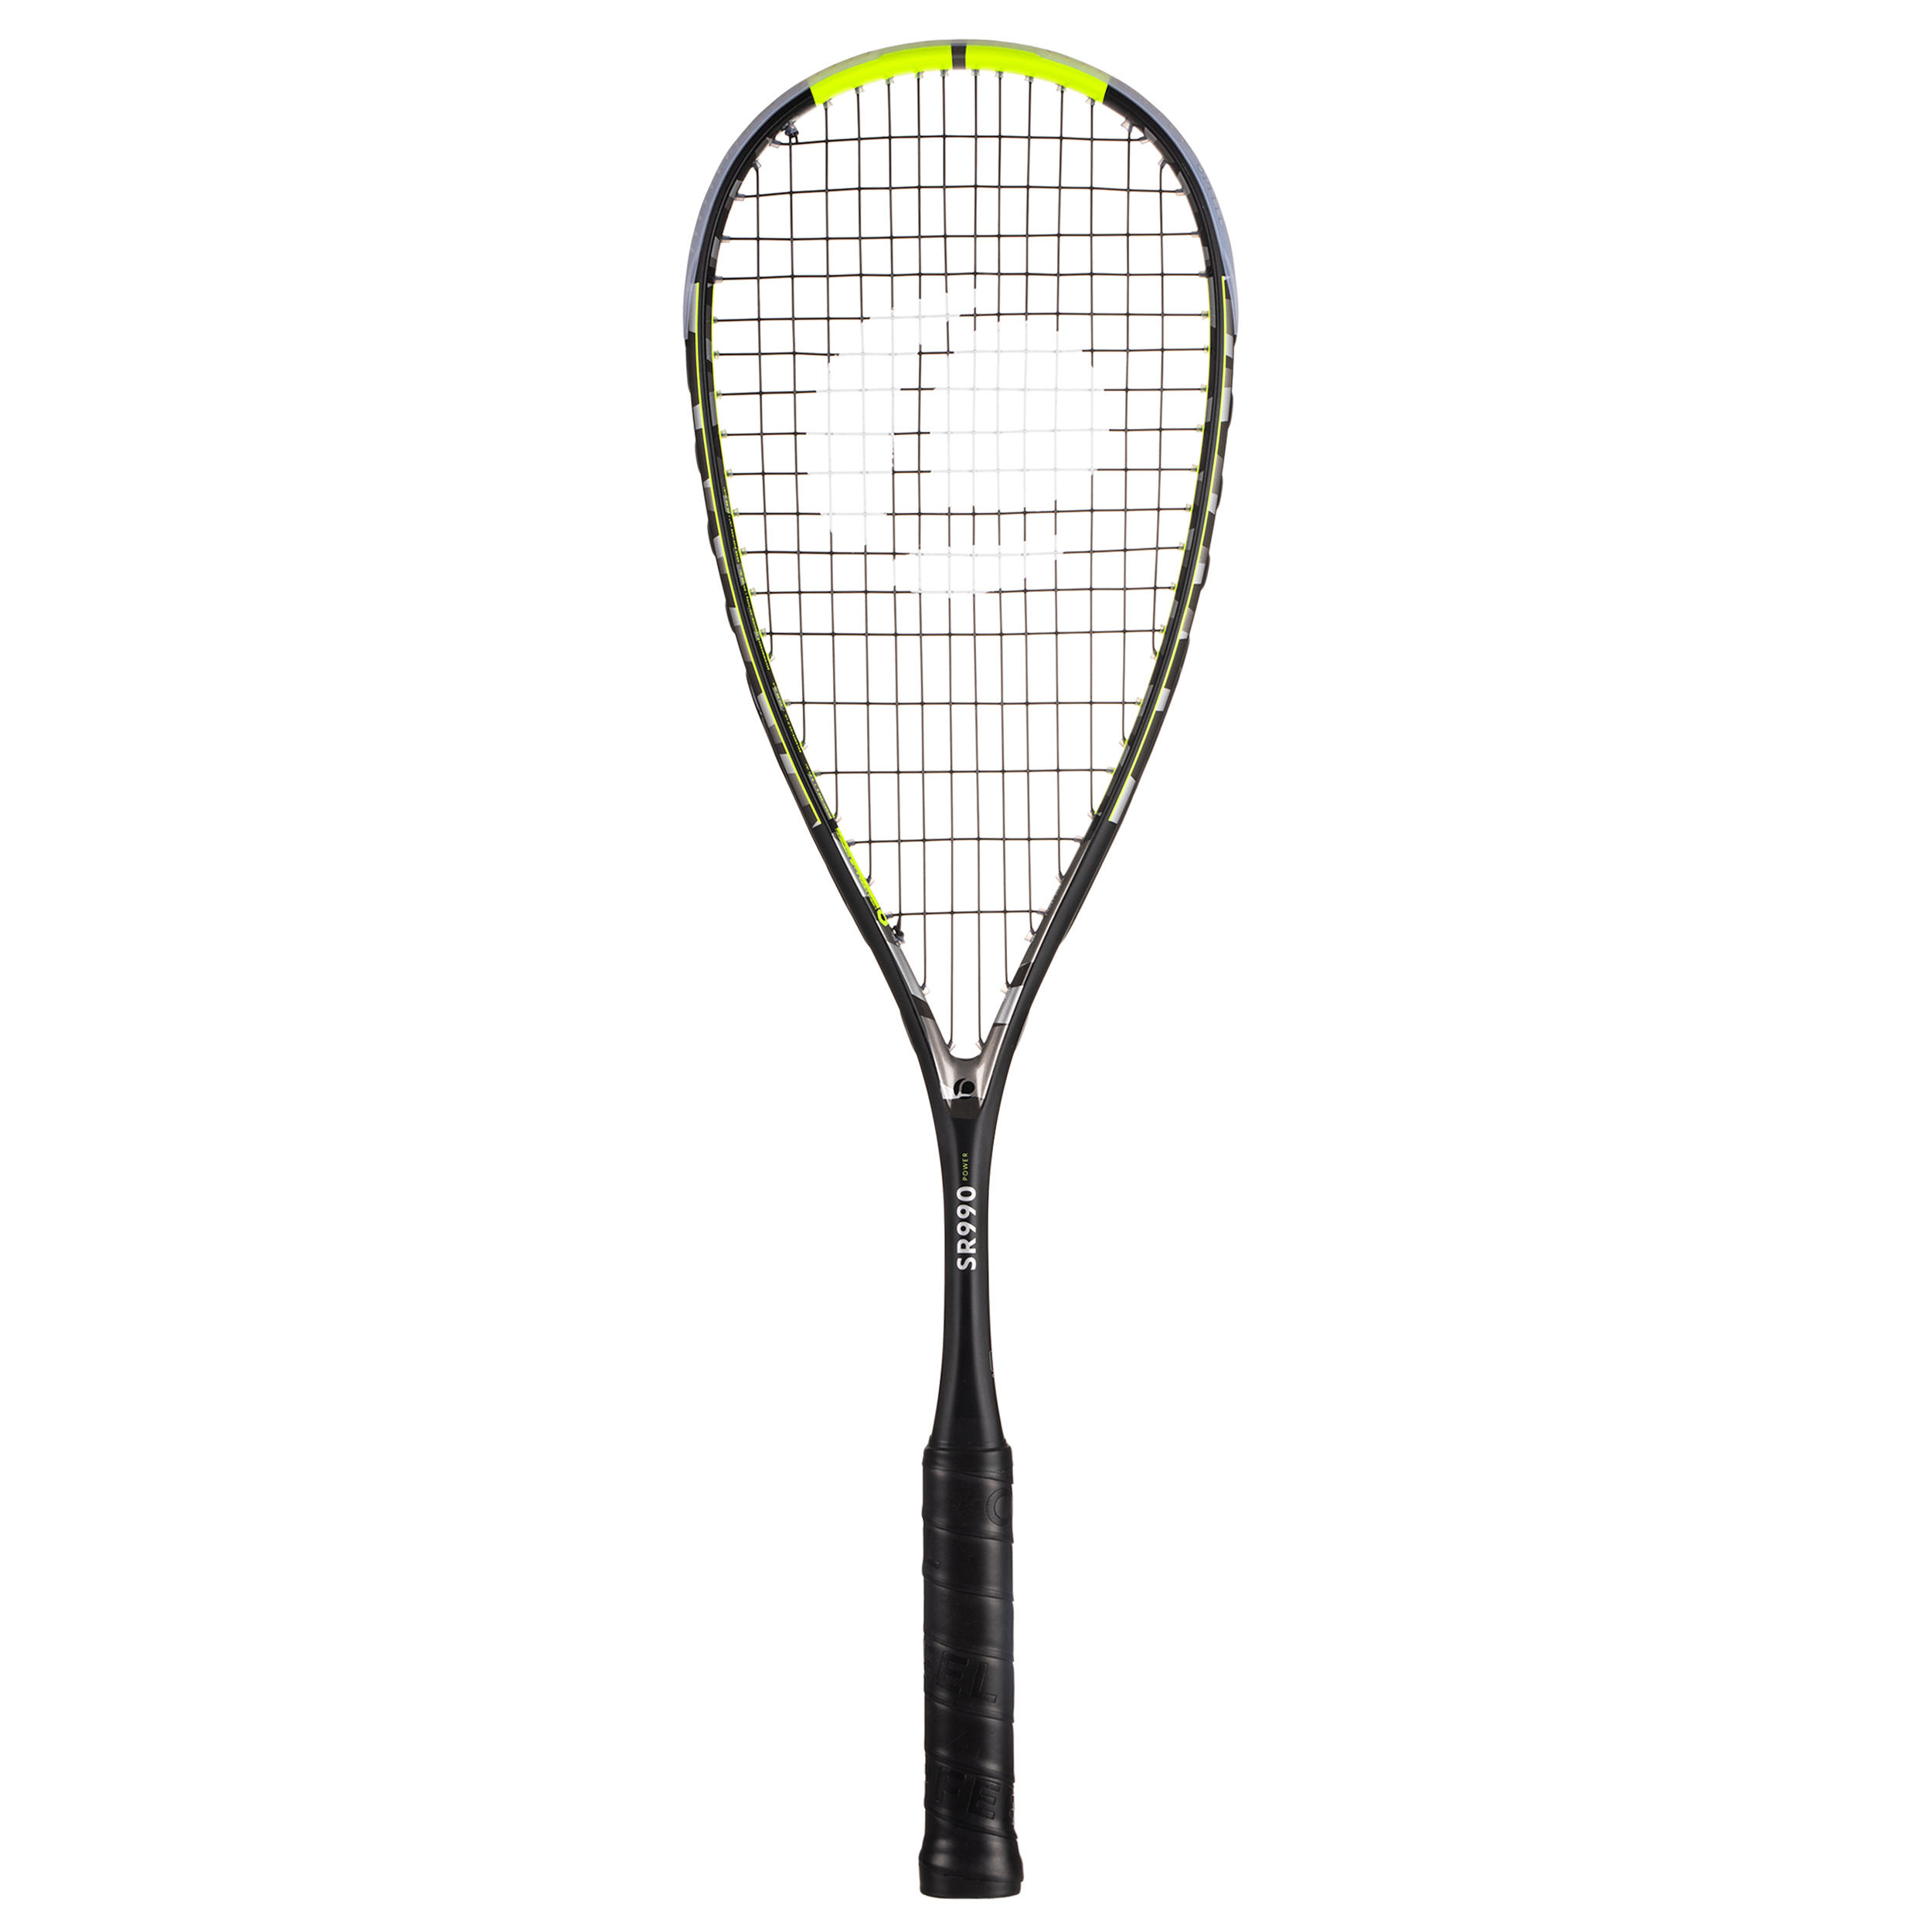 SR 990 Power 115 g Squash Racket OPFEEL 